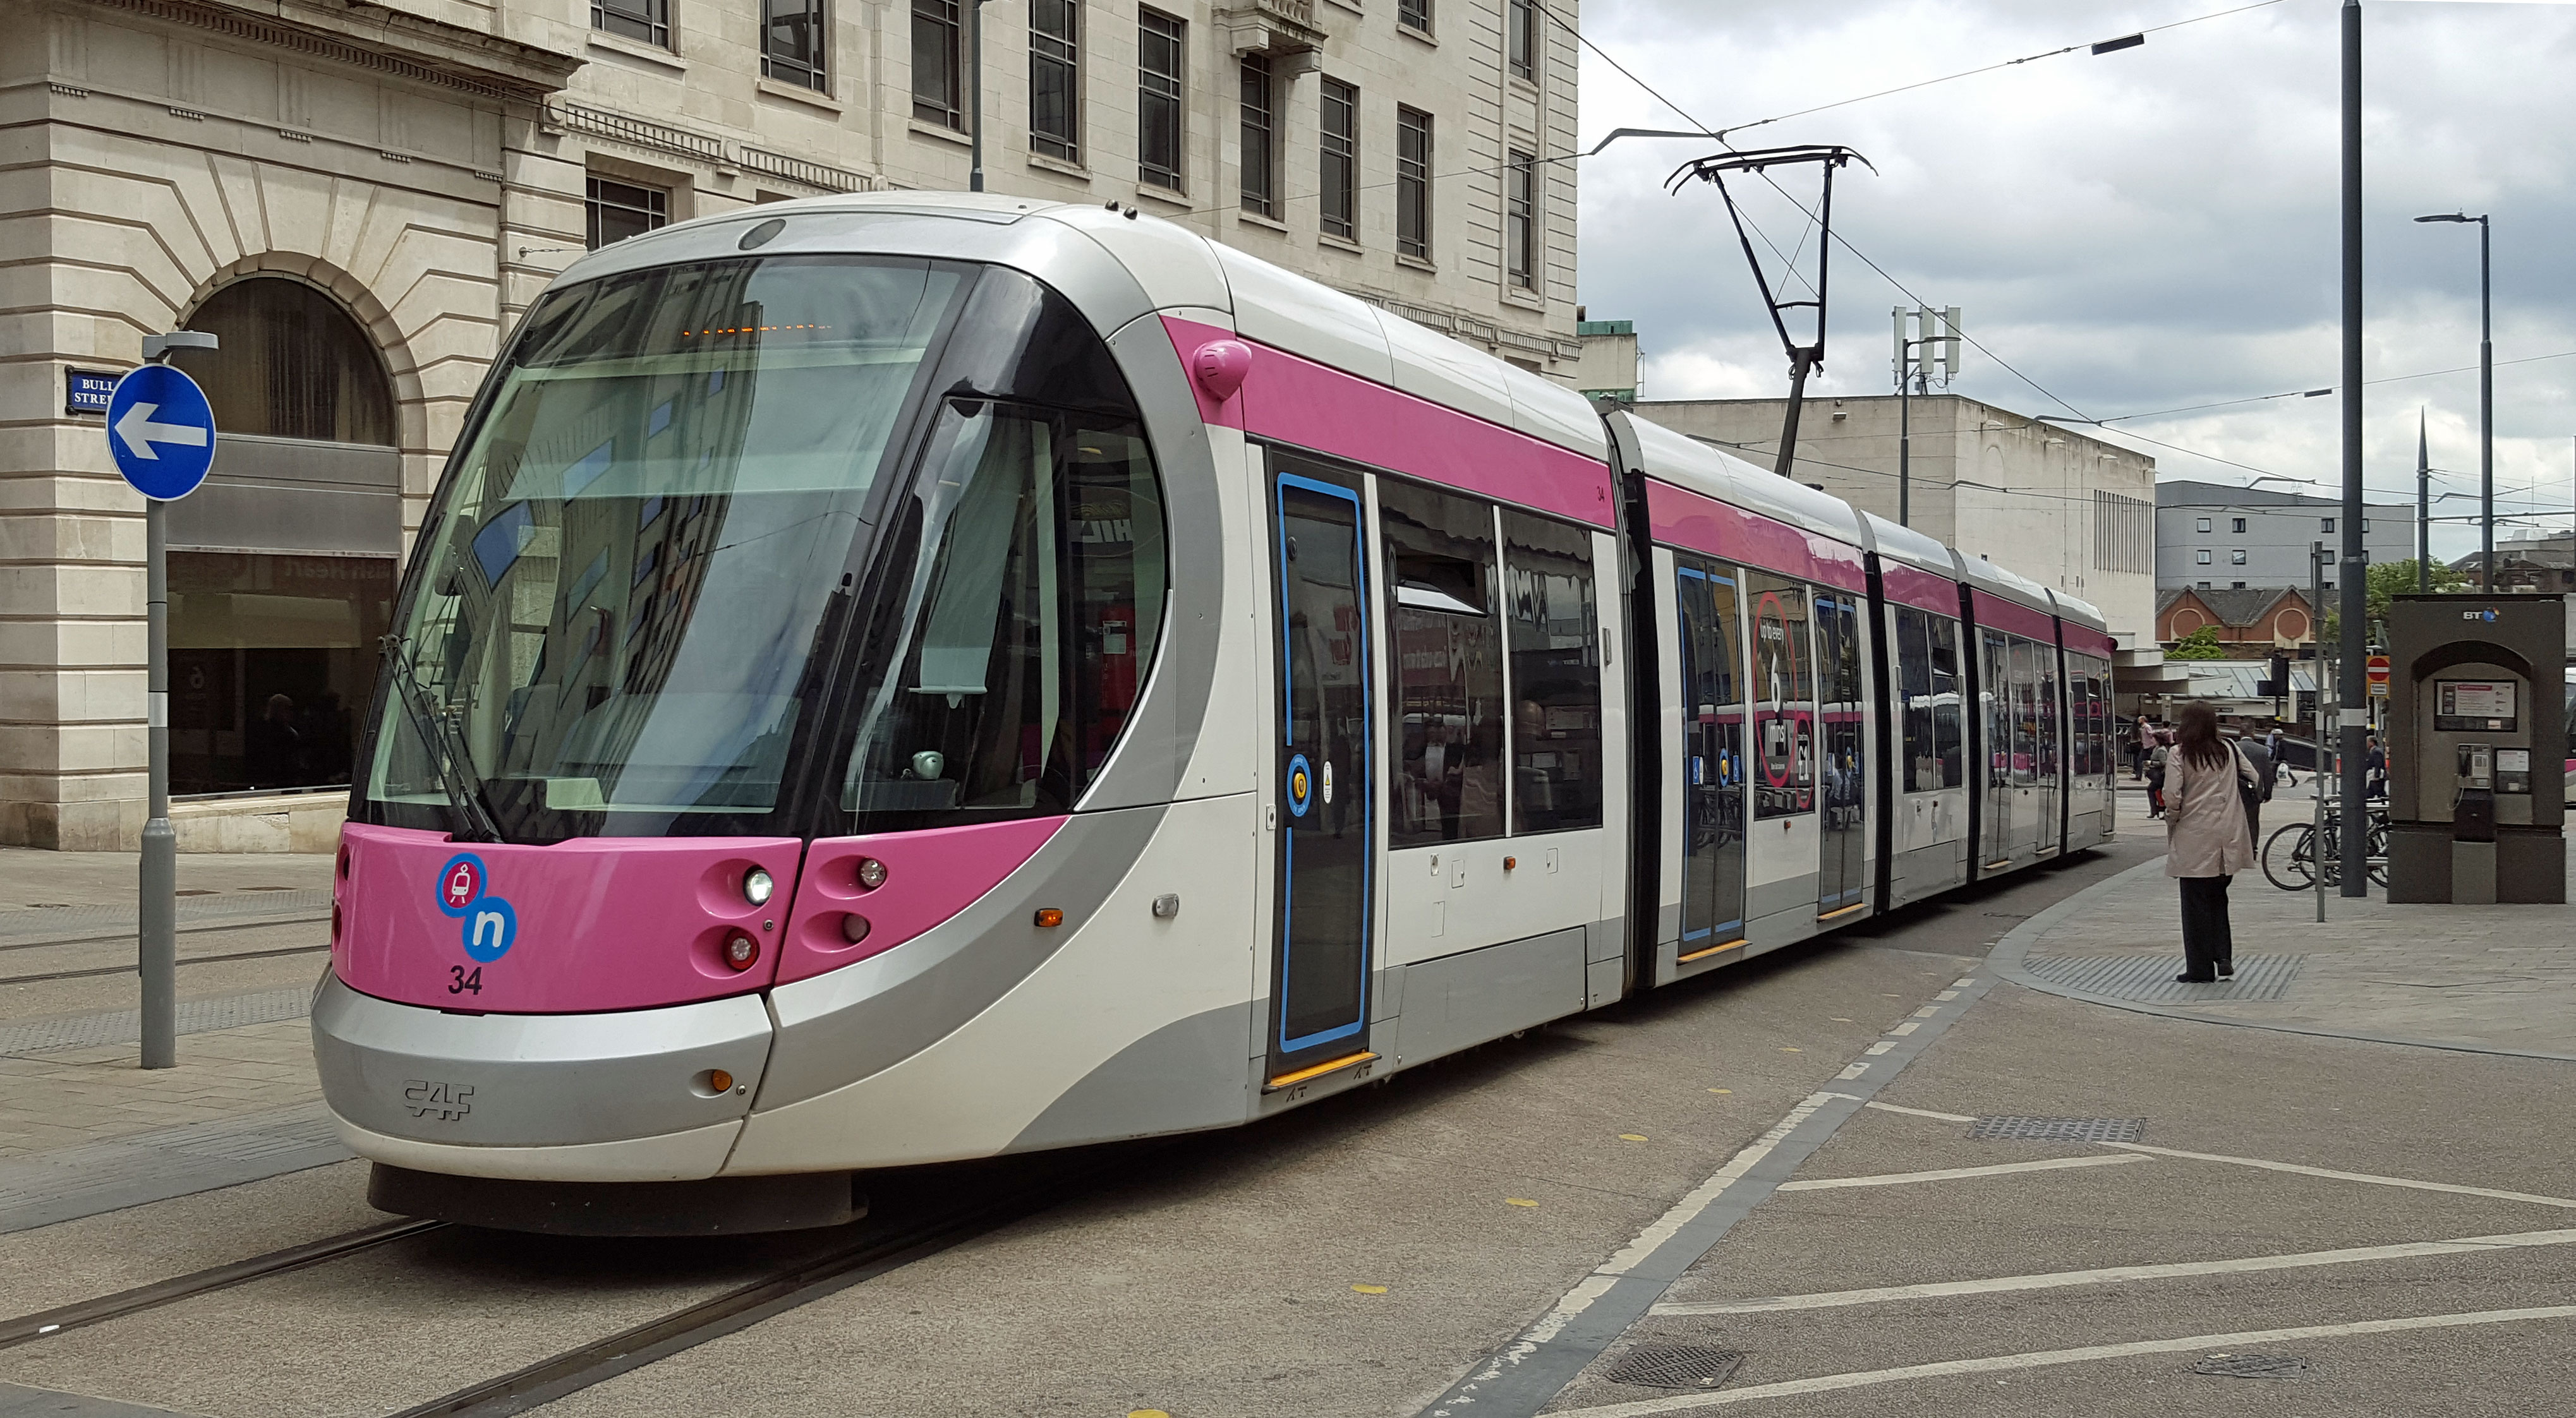 A Midland Metro tram at Bull Street stop in Birmingham city centre.